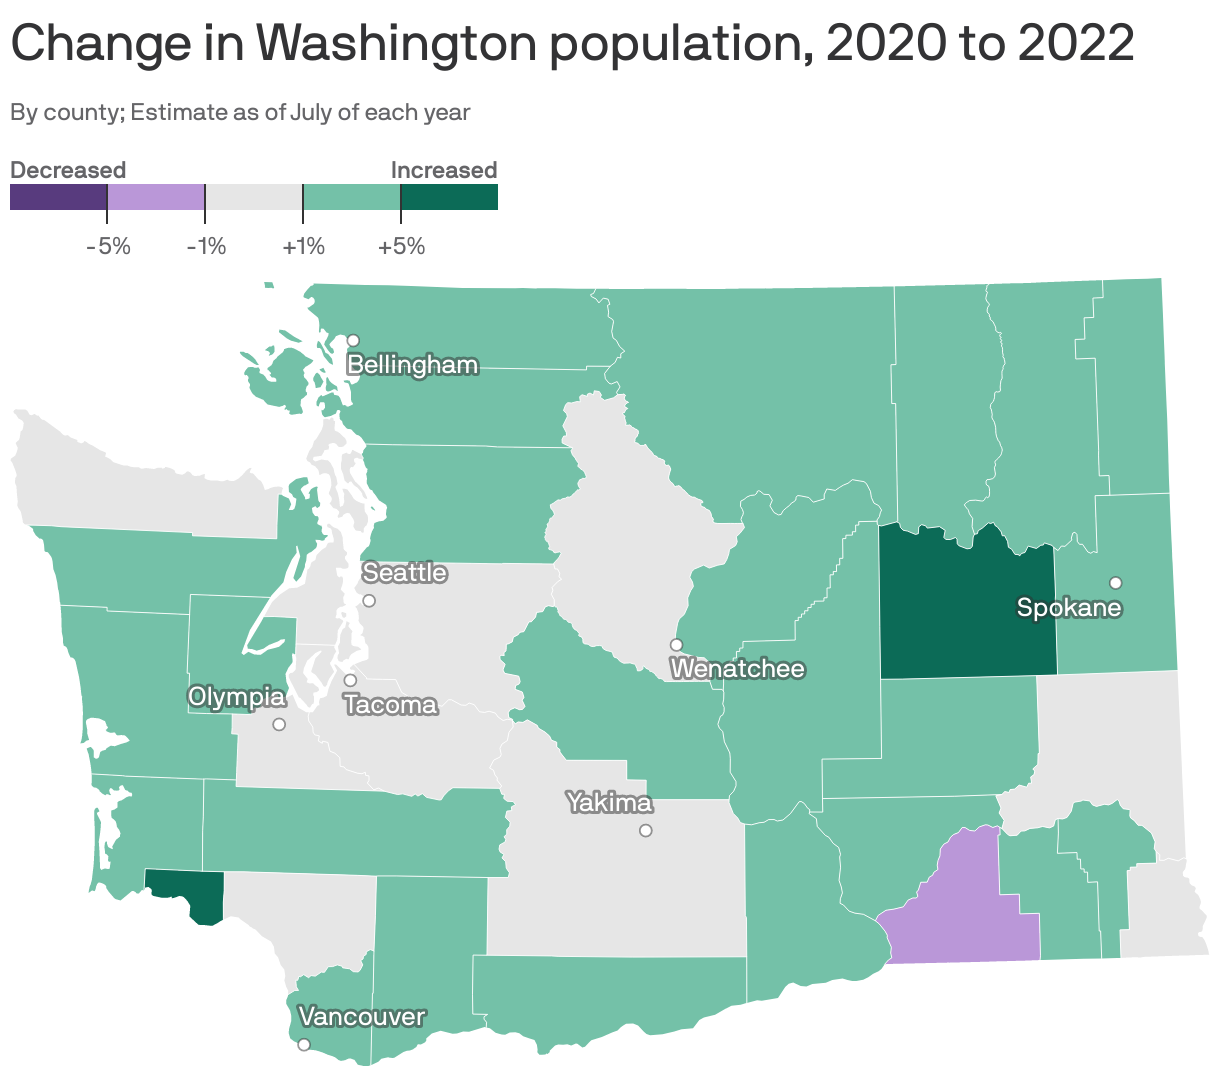 Change in Washington population, 2020 to 2022